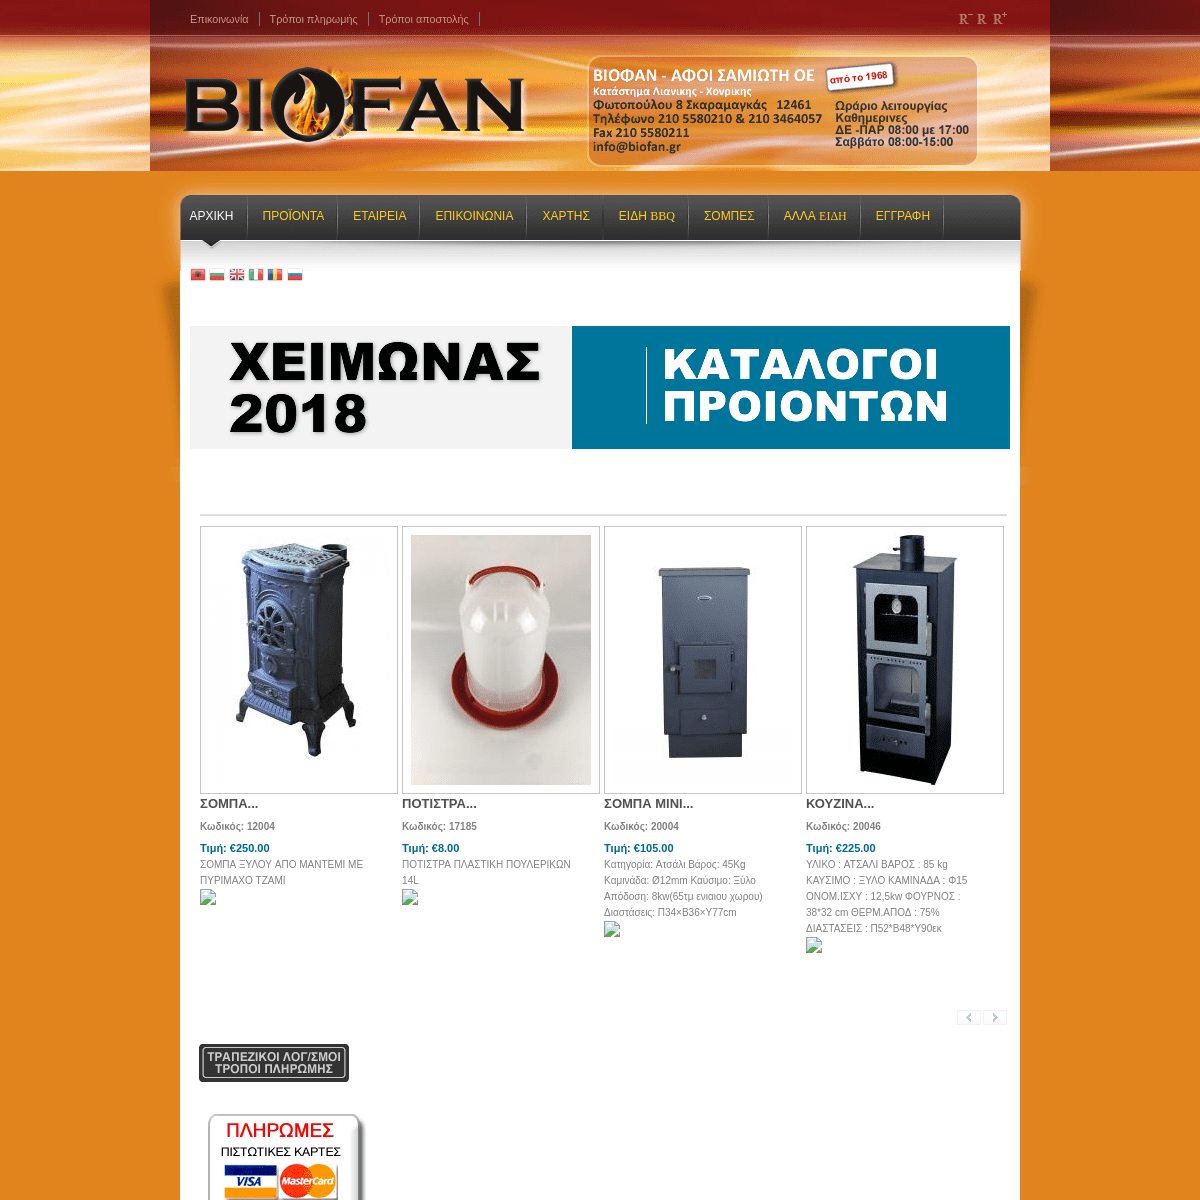 A complete backup of biofan.gr